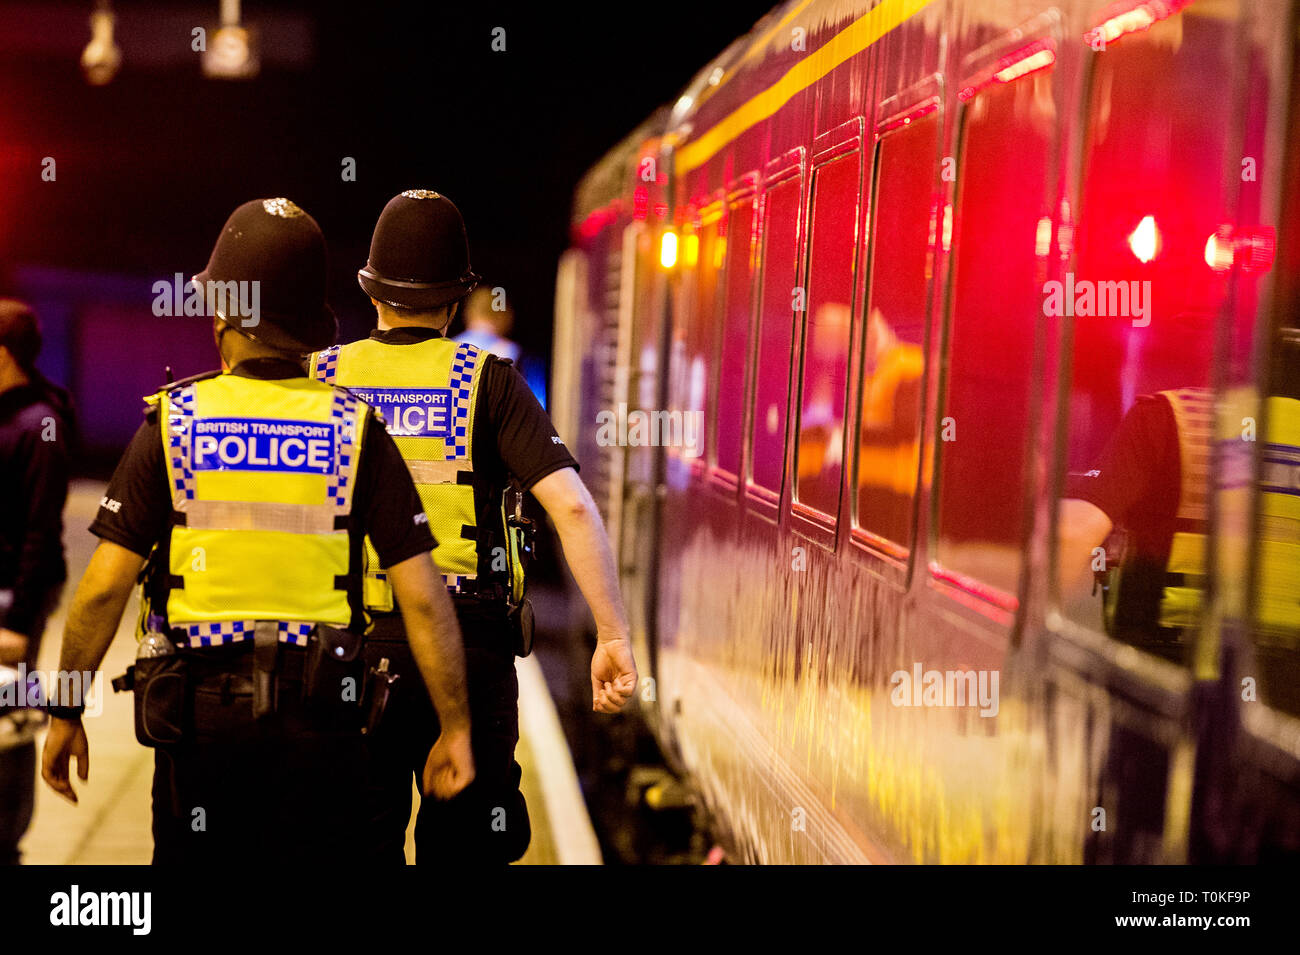 British transport Police in uniform walk along side a train Stock Photo